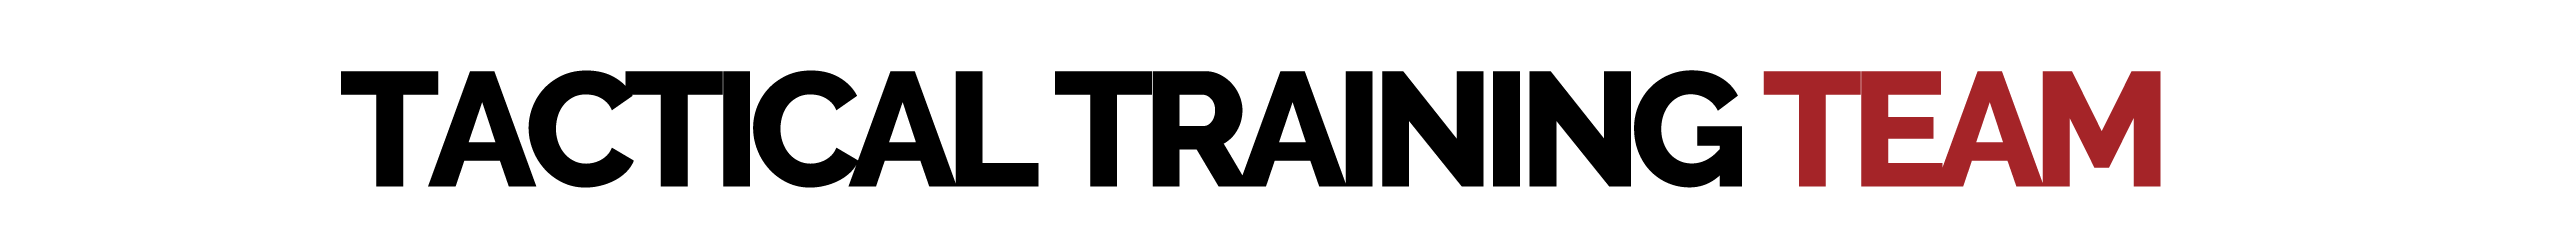 logo_black_nur_text.png